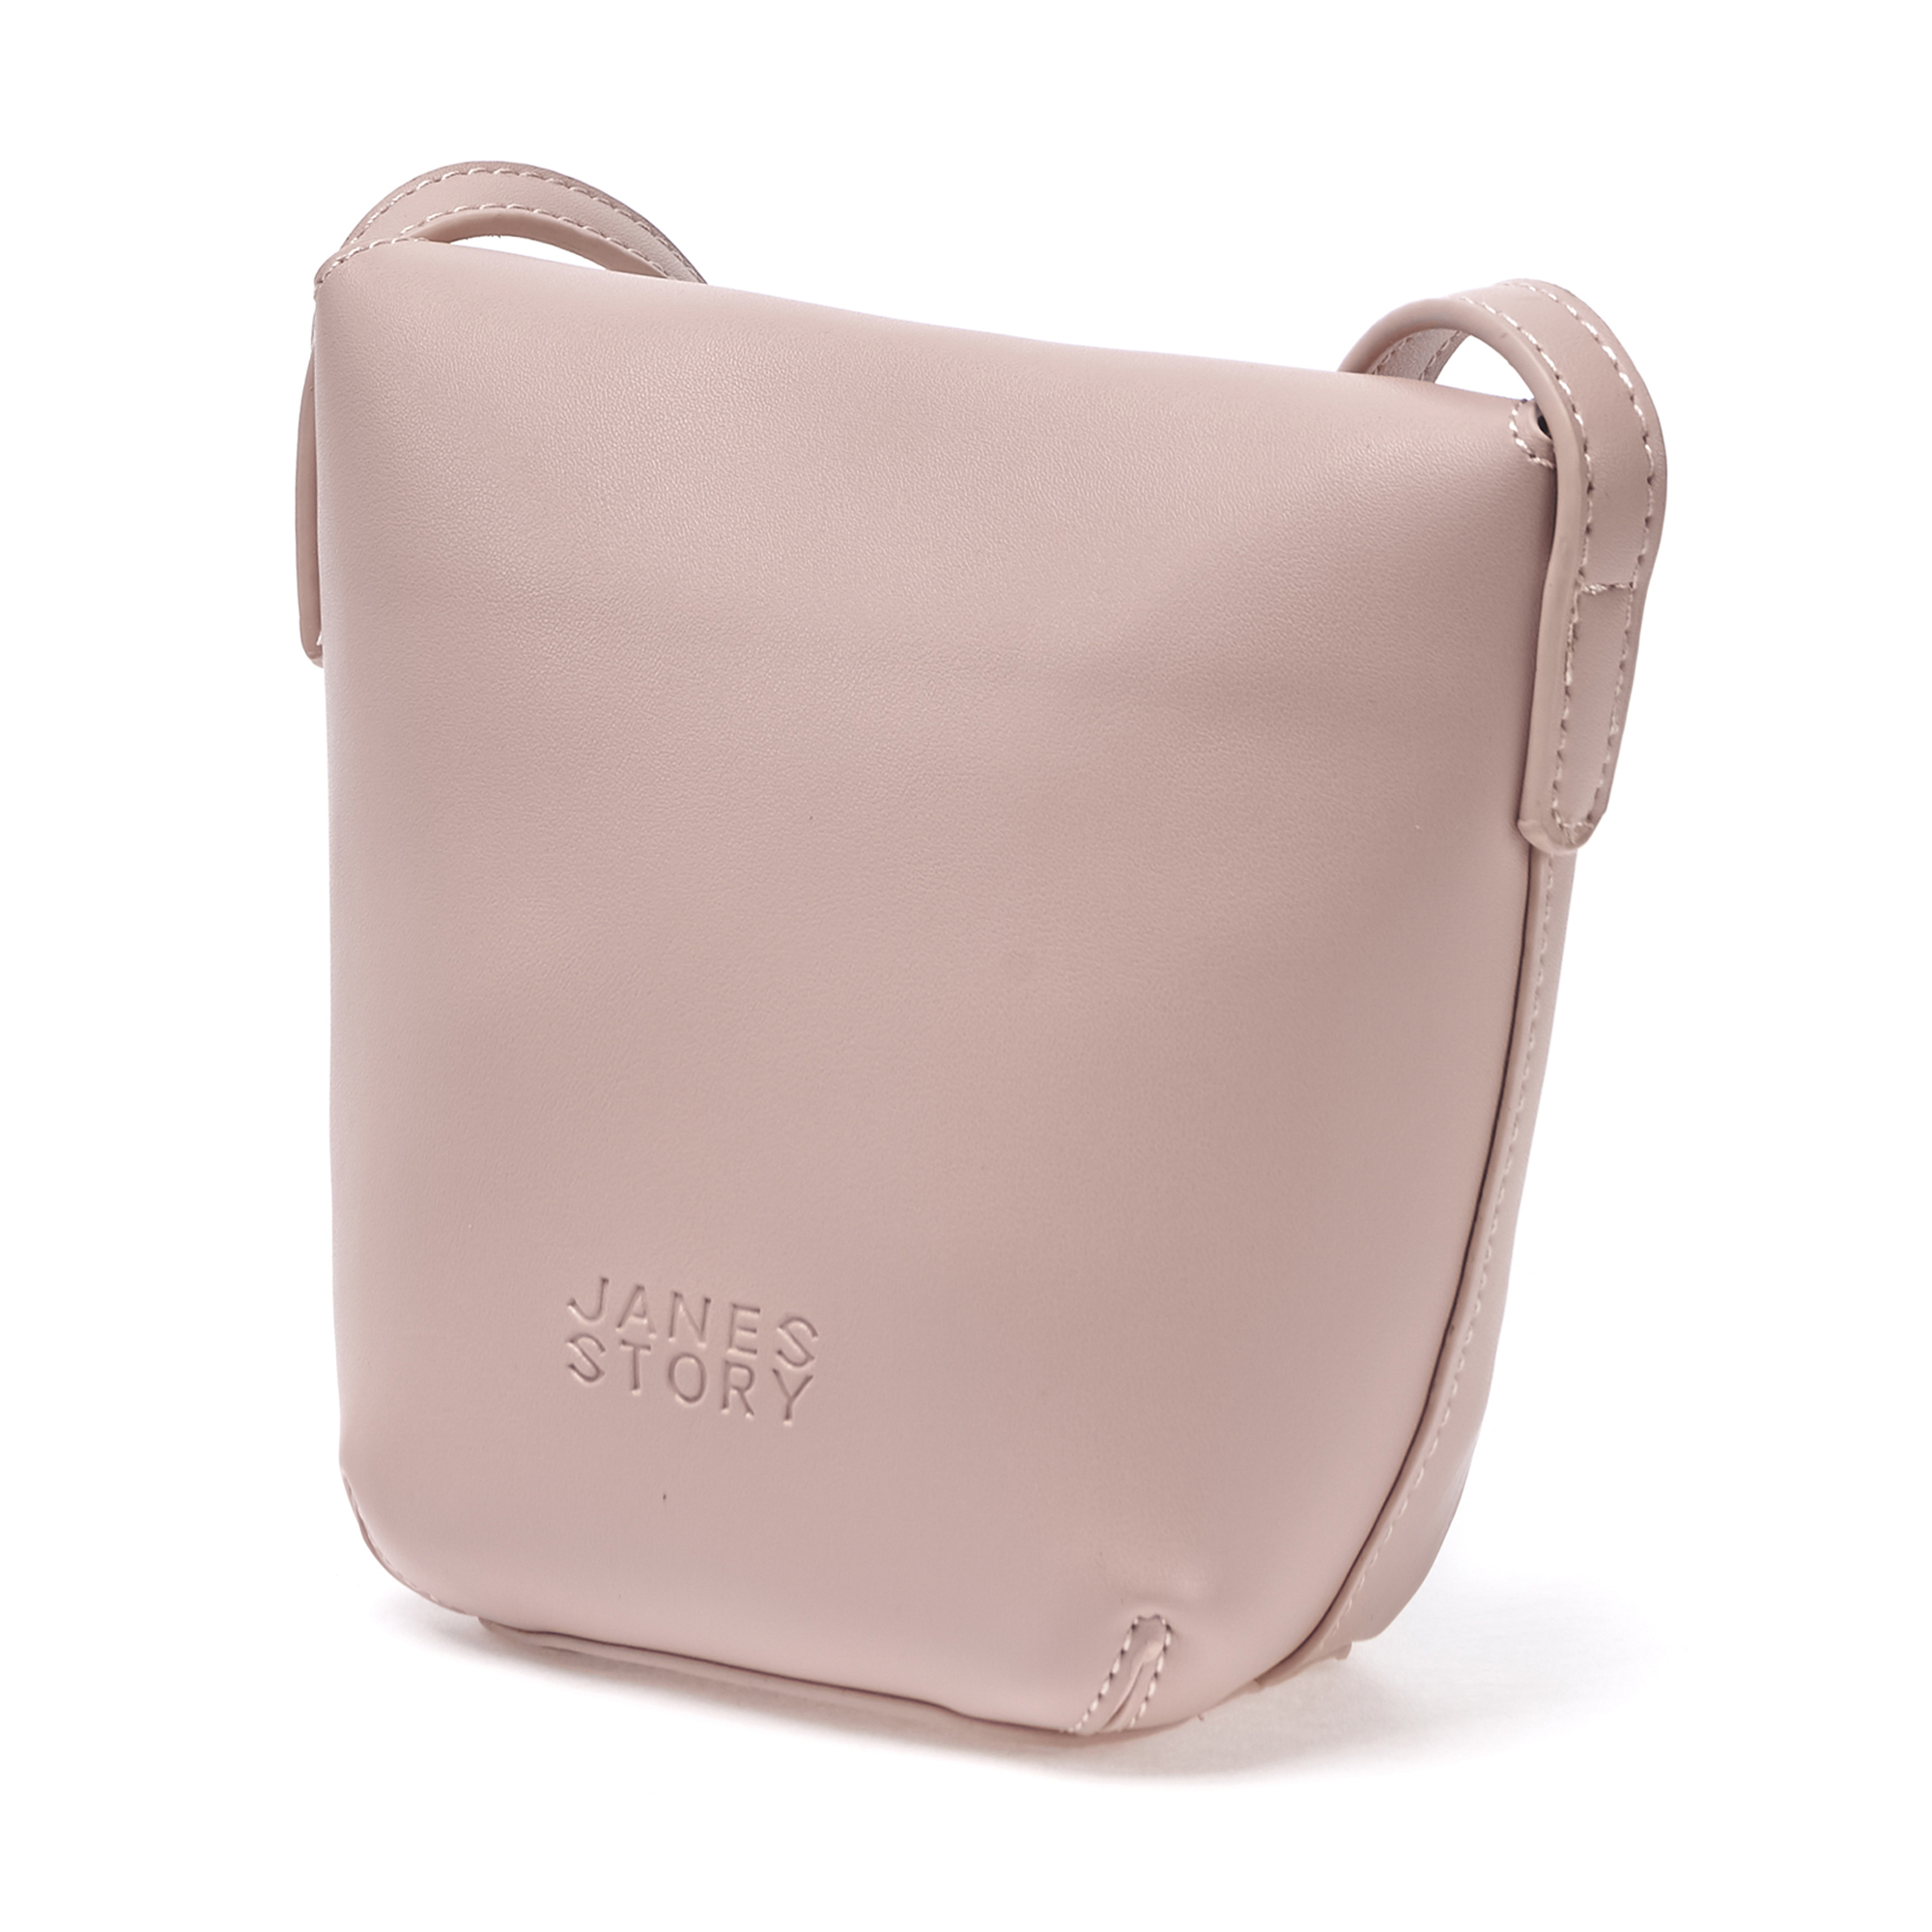 JS-405-1-68 светло-розовая сумка женская Jane's Story,